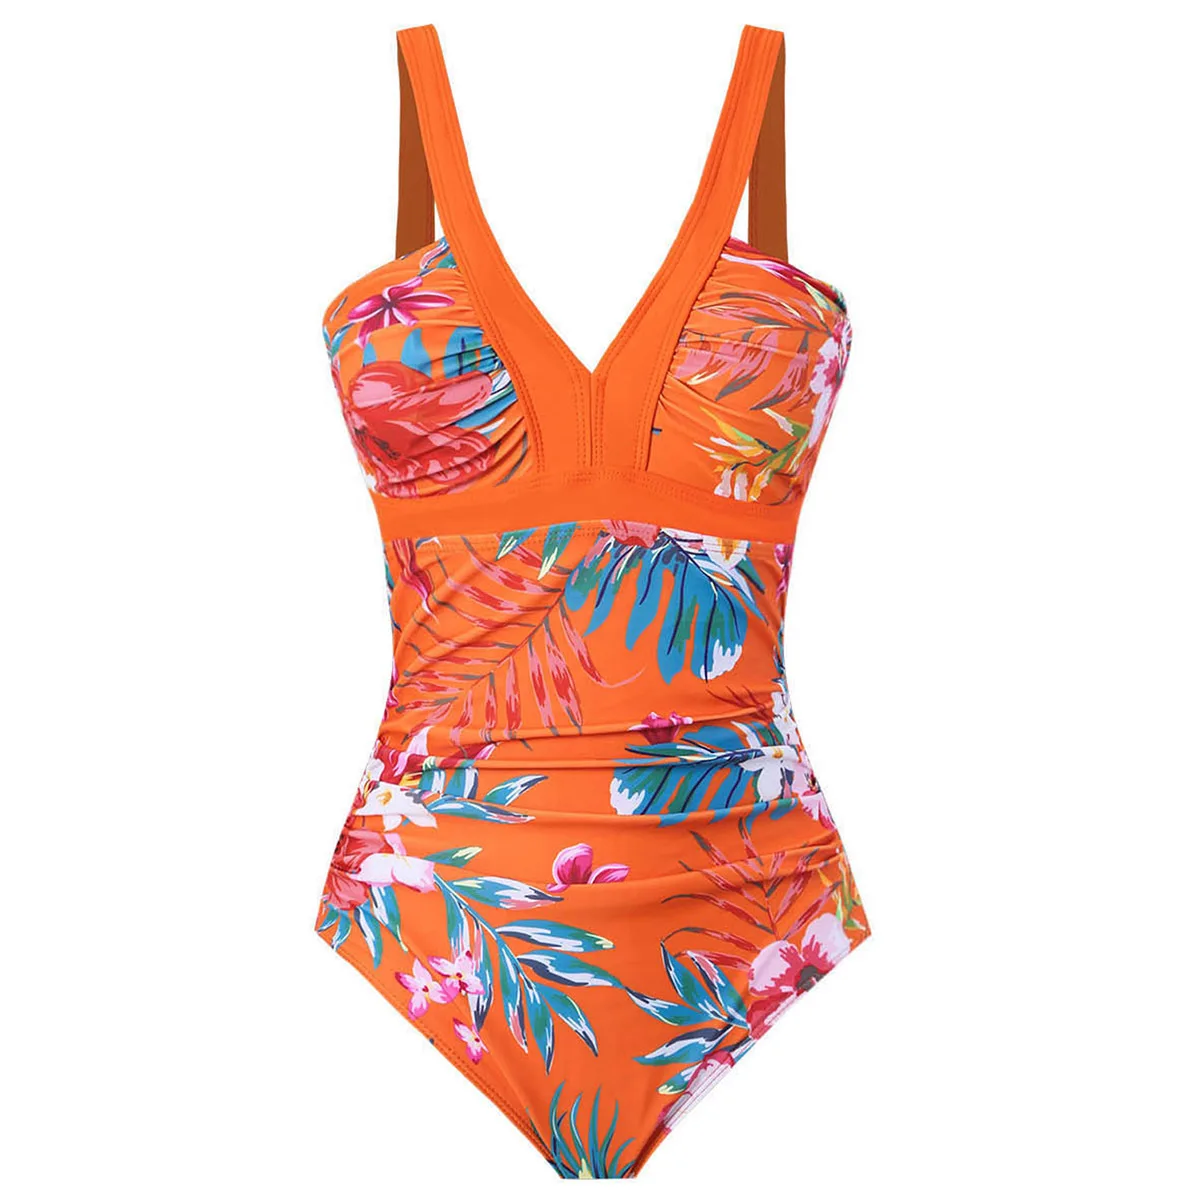 High Quality Women's Swimwear Floral Pattern One Piece Swimsuit Women's Sensual Bikini Swimsuit Bikini Suit